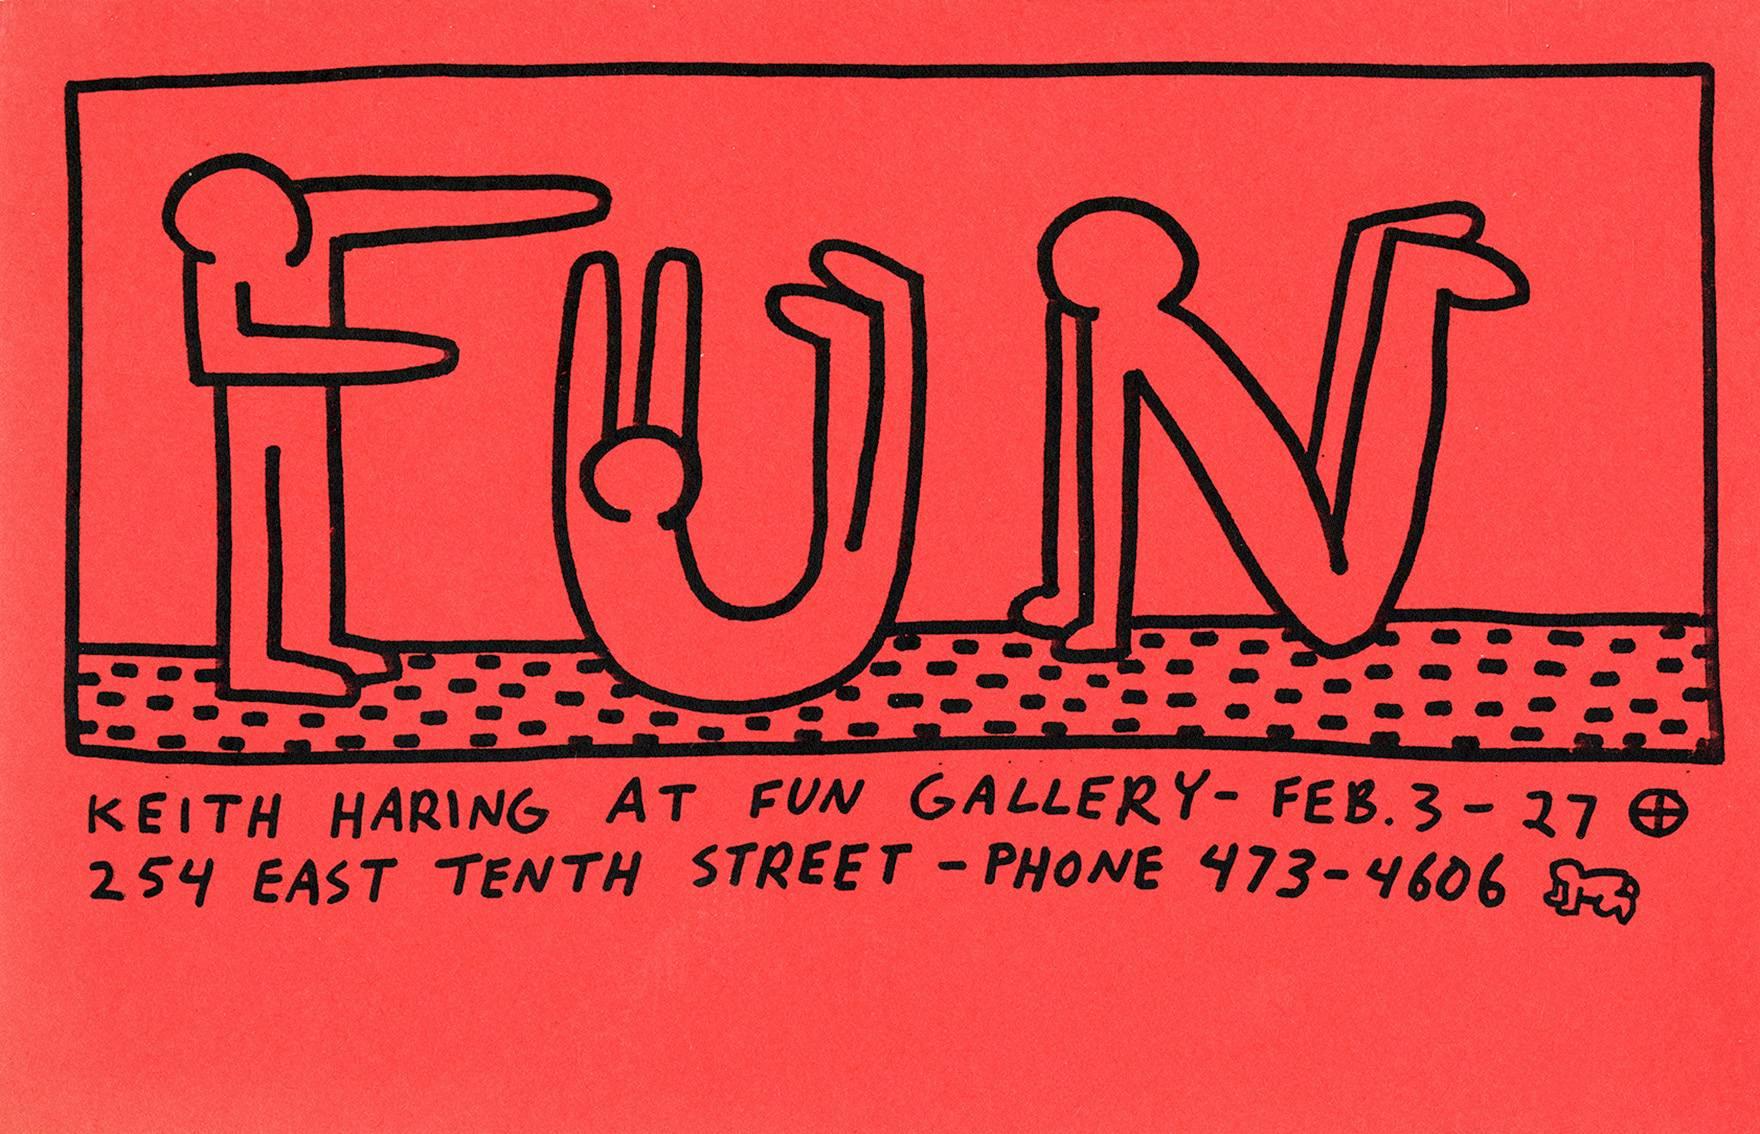 Keith Haring Fun Gallery 1983 : 
Rare annonce illustrée originale de 1983 de Keith Haring publiée à l'occasion de l'exposition historique de Haring en 1983 à la Fun Gallery dans l'East Village : Keith Haring at Fun Gallery Feb 3 - Feb 27, 1983. Un